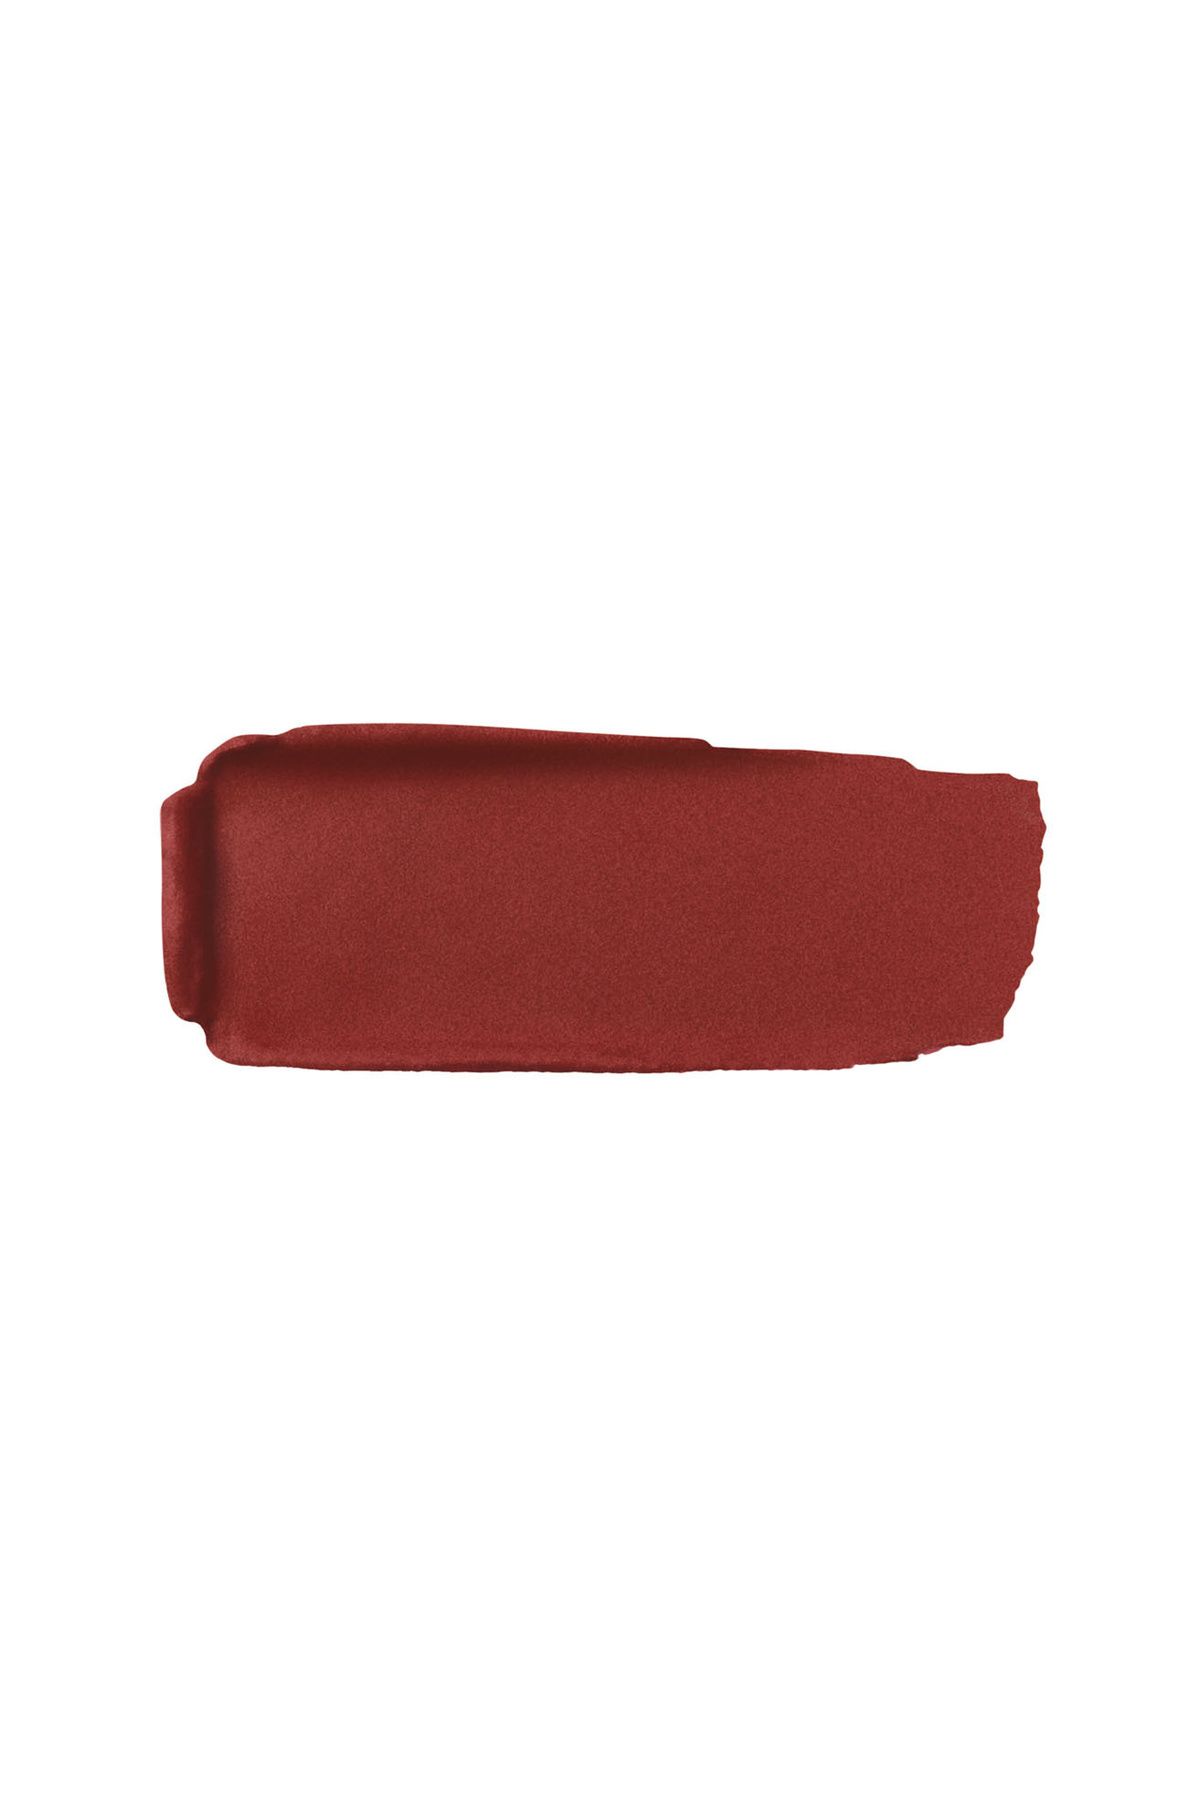 Guerlain رژ لب مات مخملی Rouge G حجیم کننده و نرم کننده لب ها رنگ قرمز اجری شماره 888